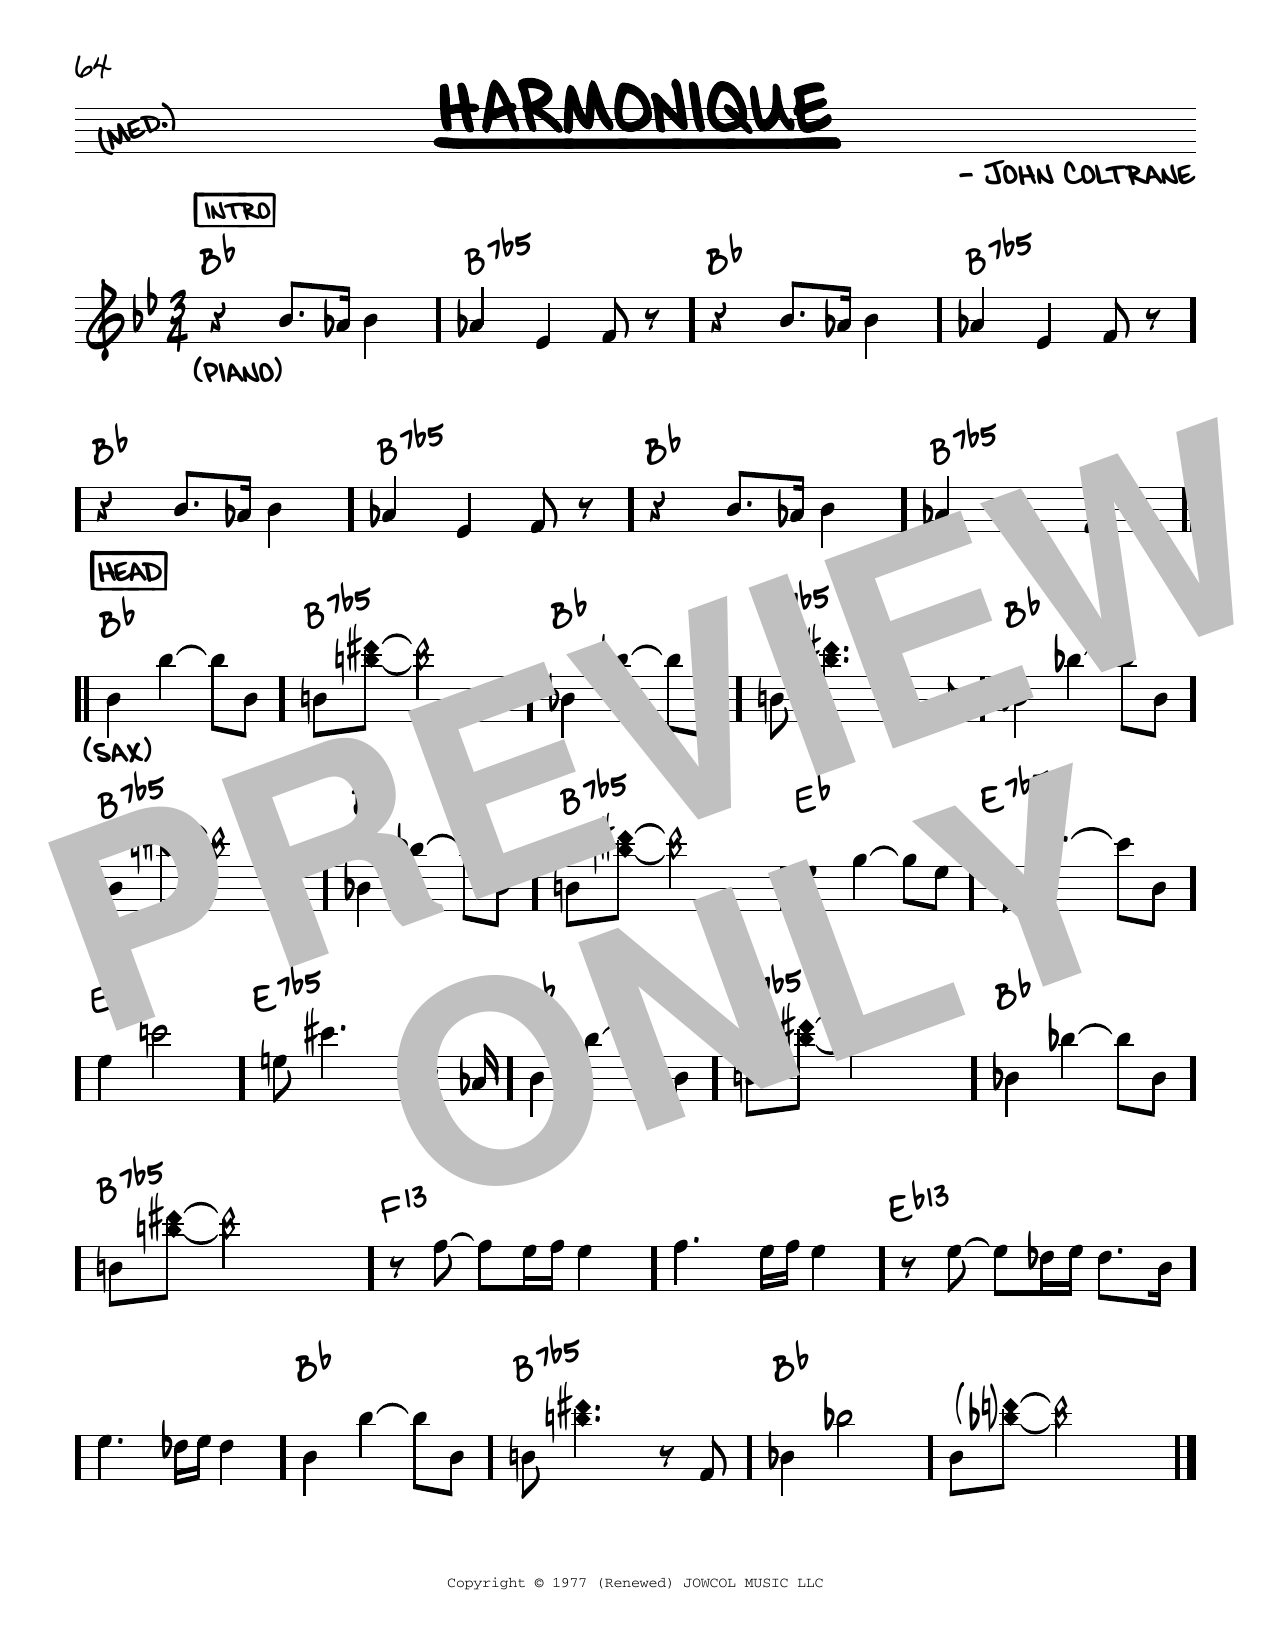 Download John Coltrane Harmonique Sheet Music